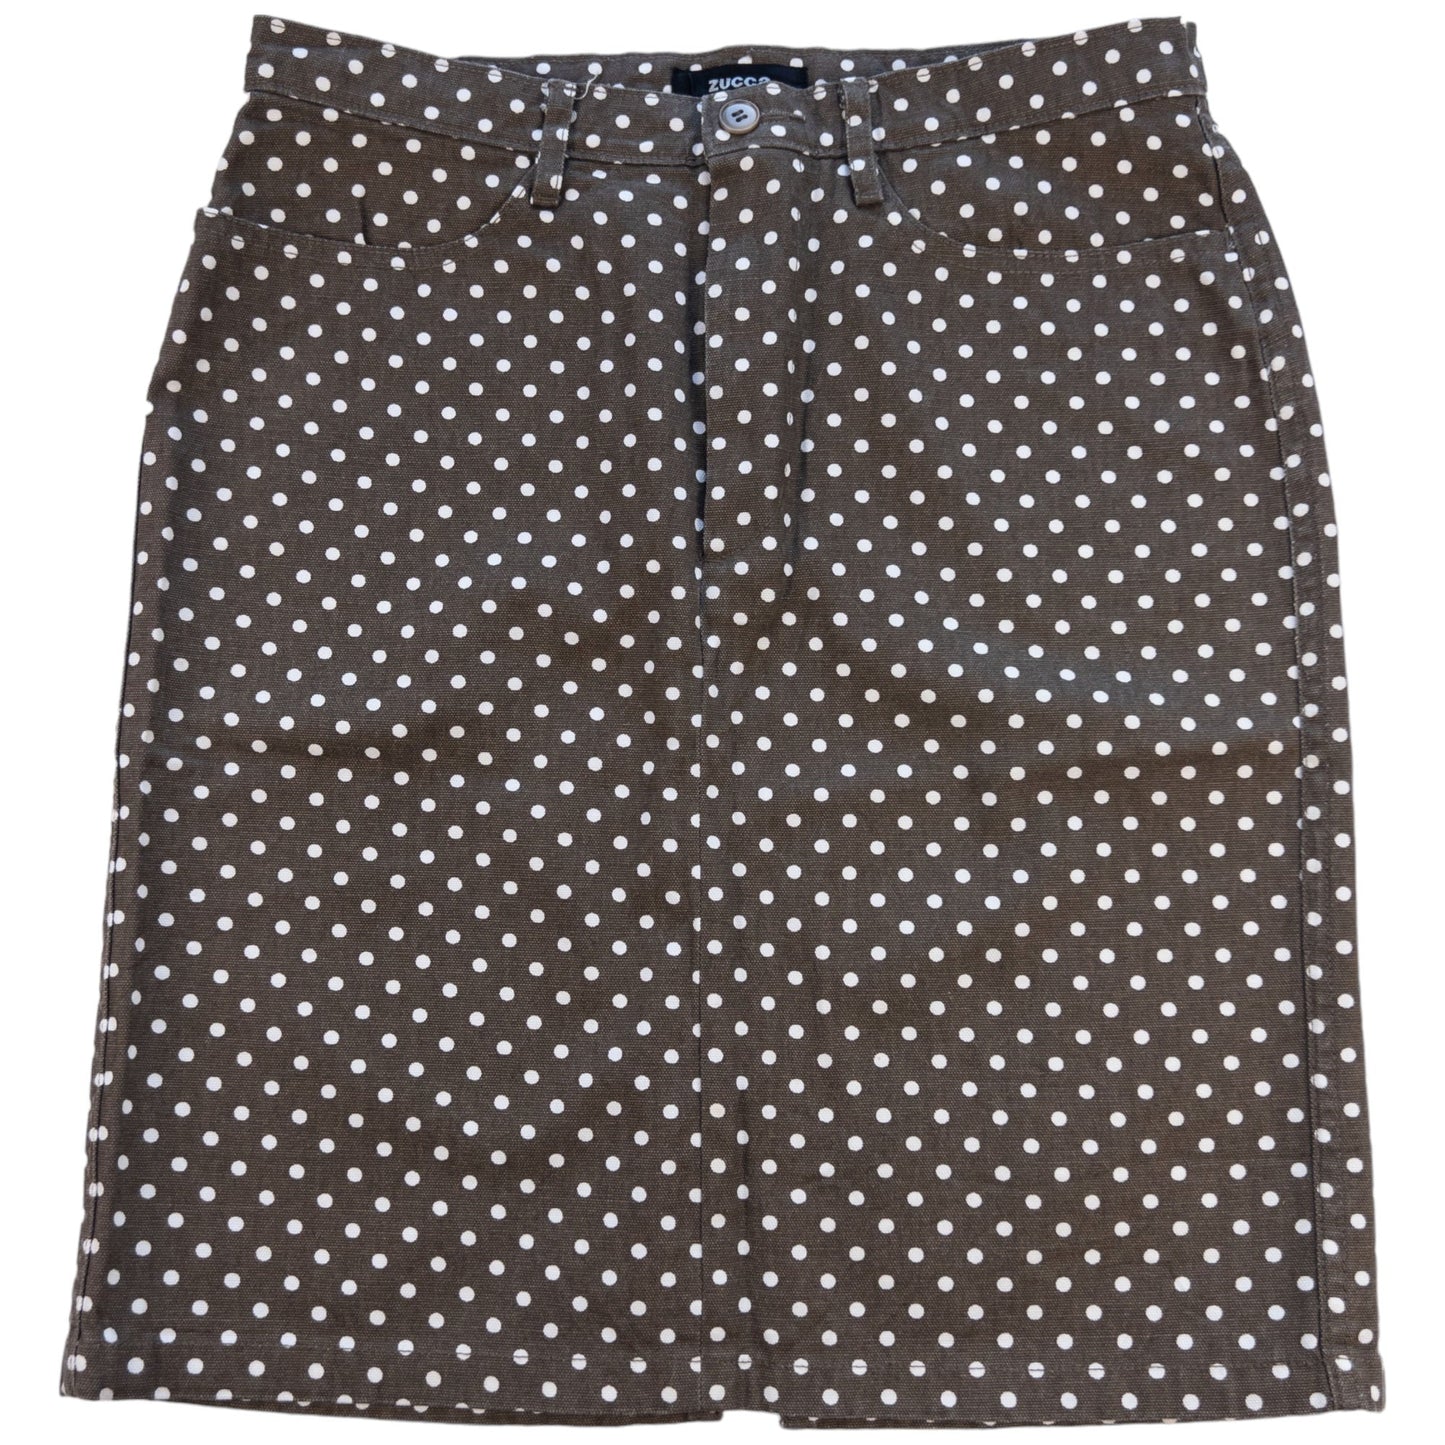 Vintage Zucca By Issey Miyake Polka Dot Skirt Women's Size W28